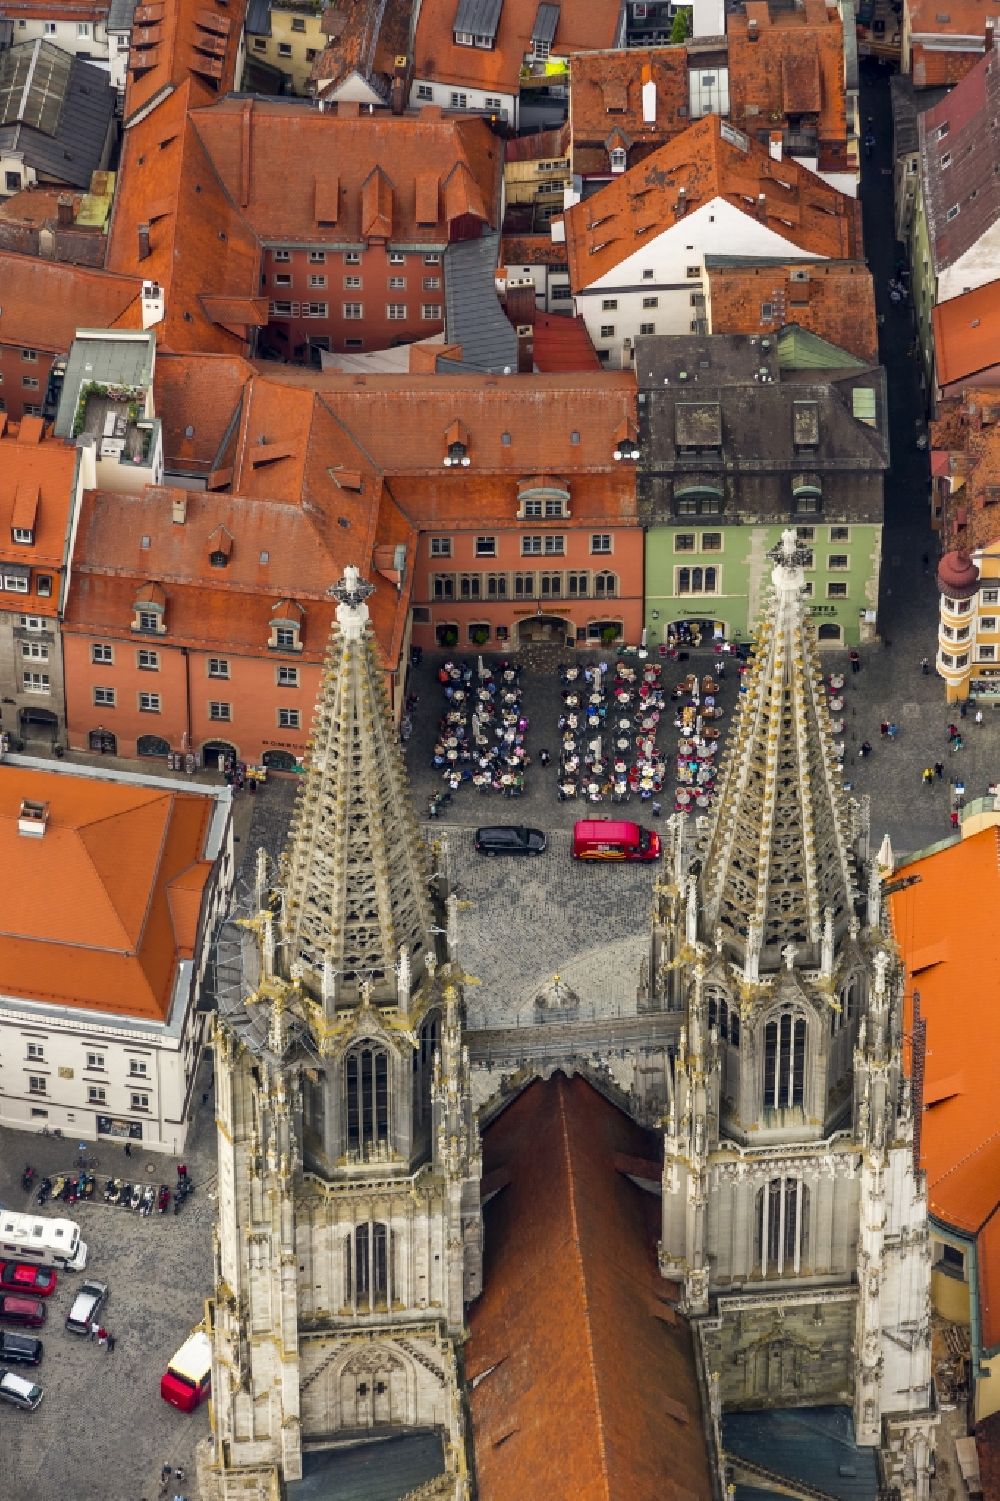 Luftbild Regensburg - Dom St Peter in der Altstadt in Regensburg im Bundesland Bayern